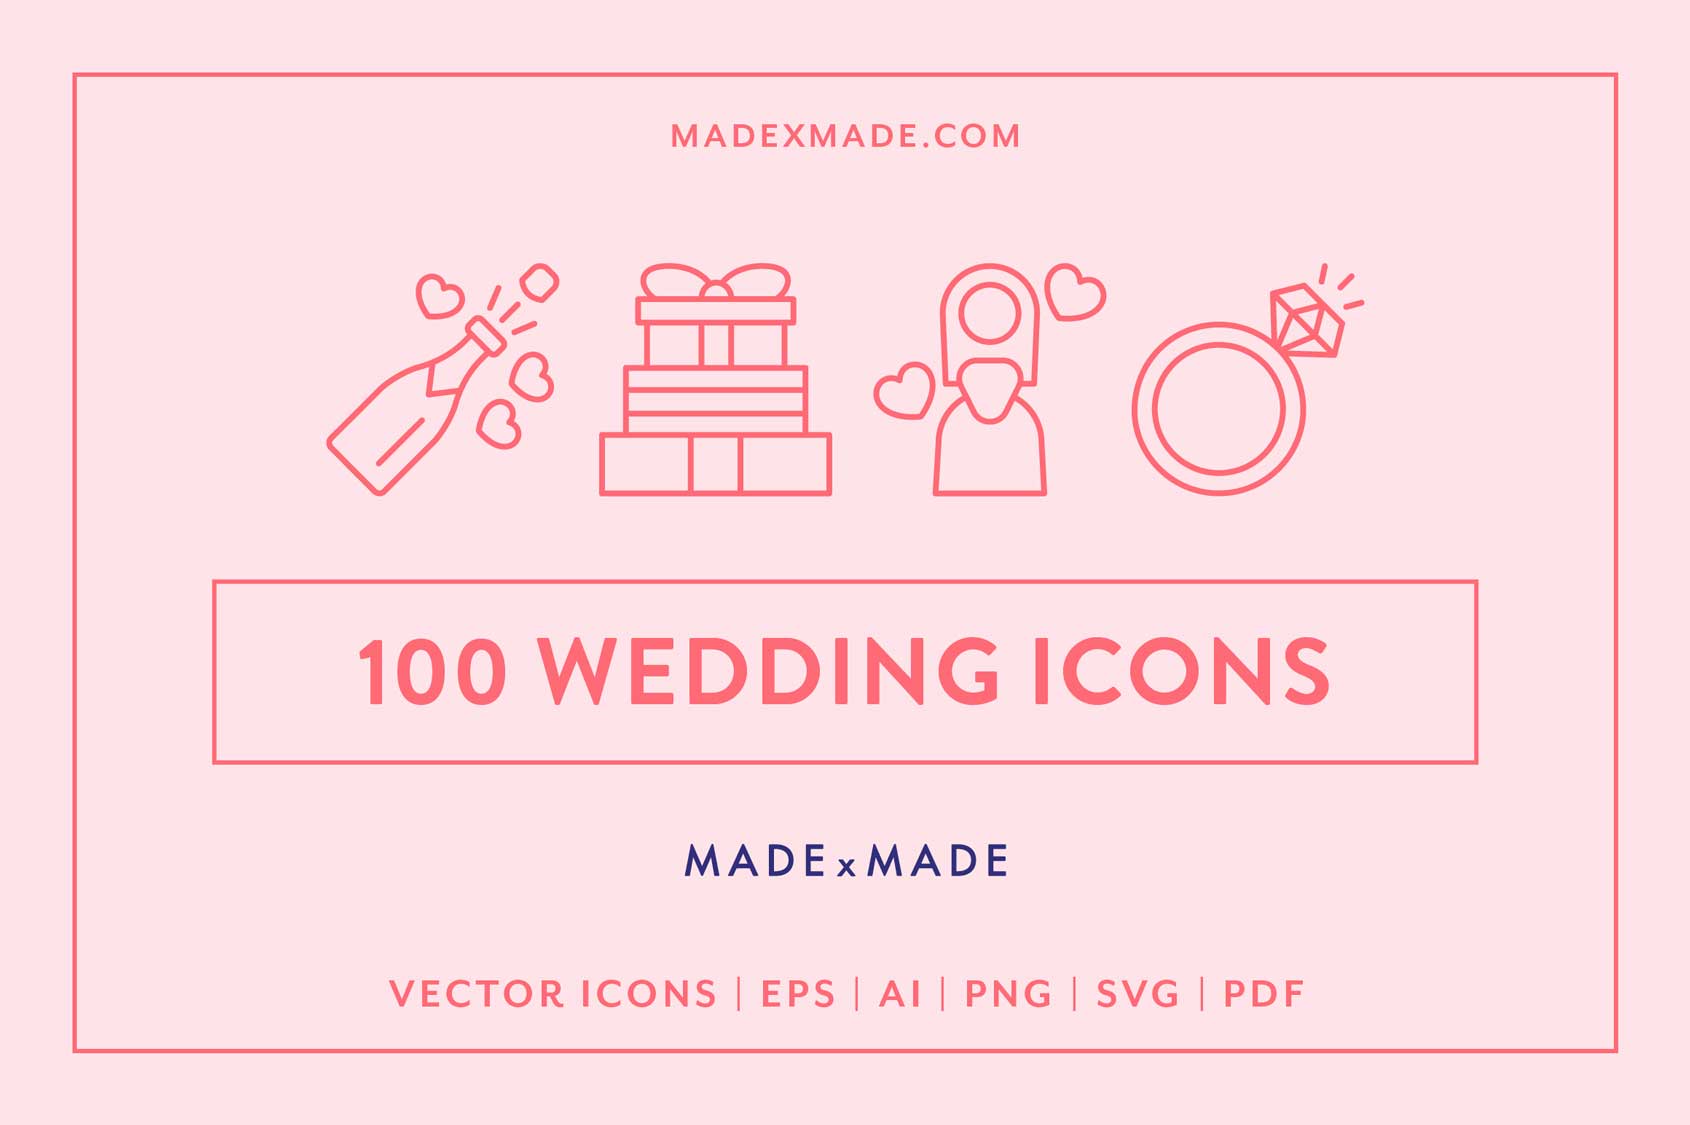 made x made icons wedding